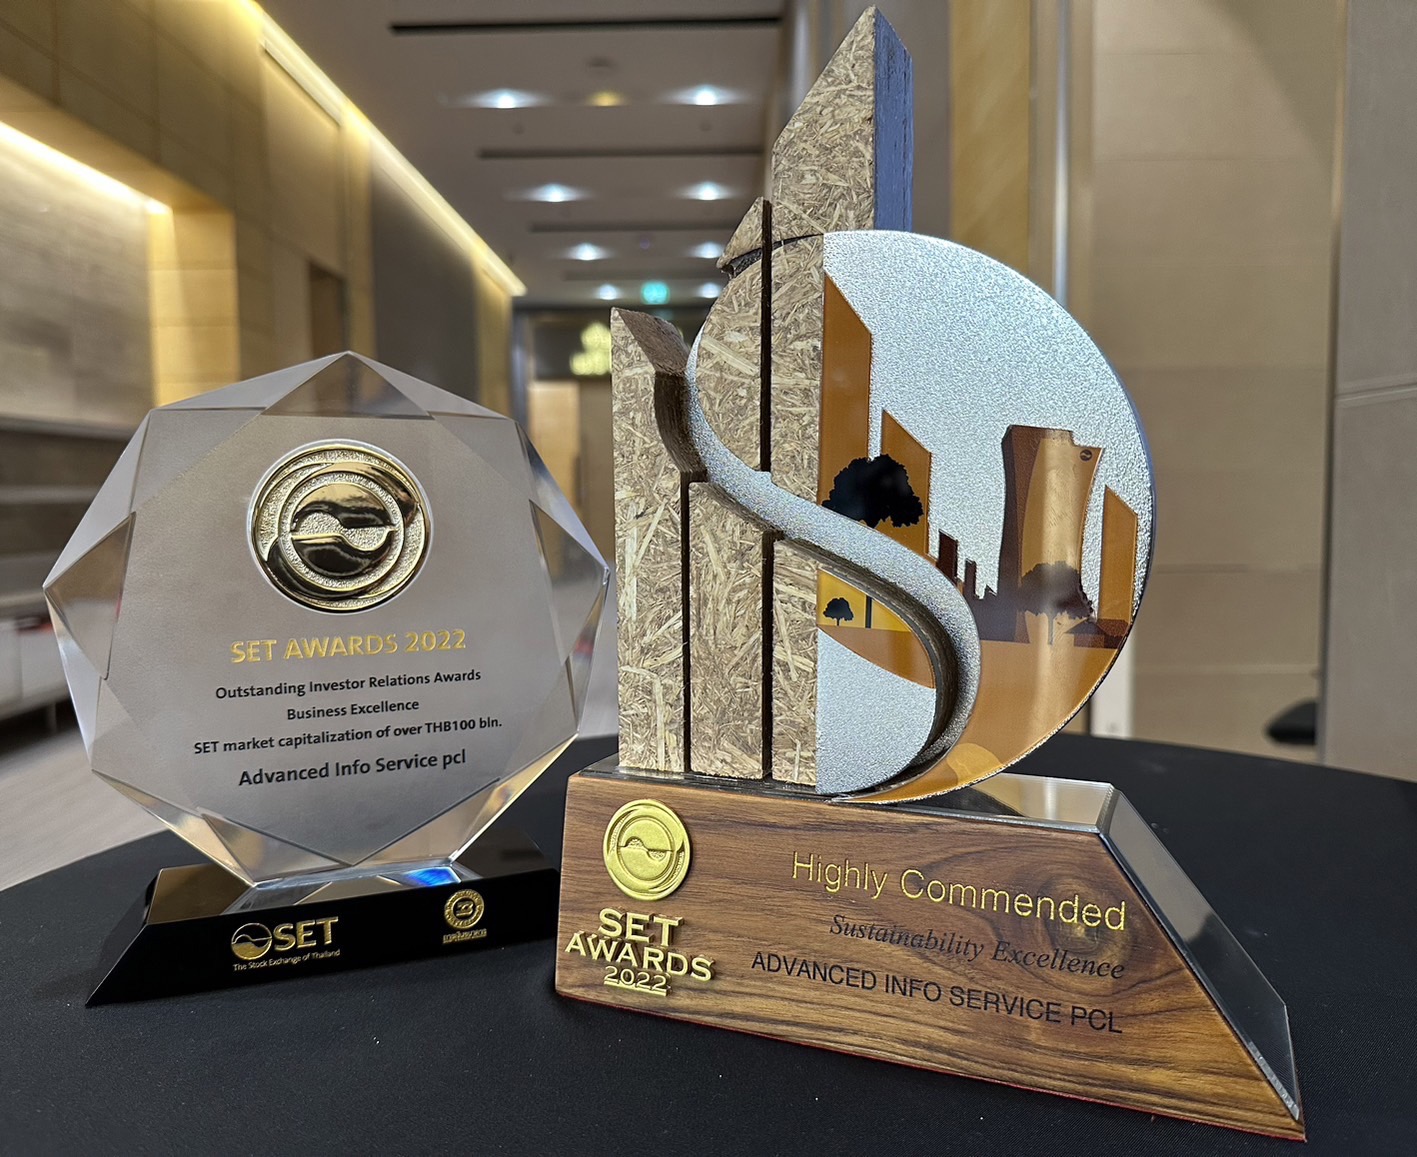 AIS กวาด 2 รางวัลใหญ่ บทพิสูจน์เป้าหมายการดำเนินธุรกิจอย่างยั่งยืน Outstanding Investor Relations Awards และ Highly Commended Sustainability Awards จากเวที SET AWARDS 2022 มุ่งสร้างการเติบโตร่วมกันของเศรษฐกิจ สังคม และสิ่งแวดล้อม ในโลกดิจิทัล